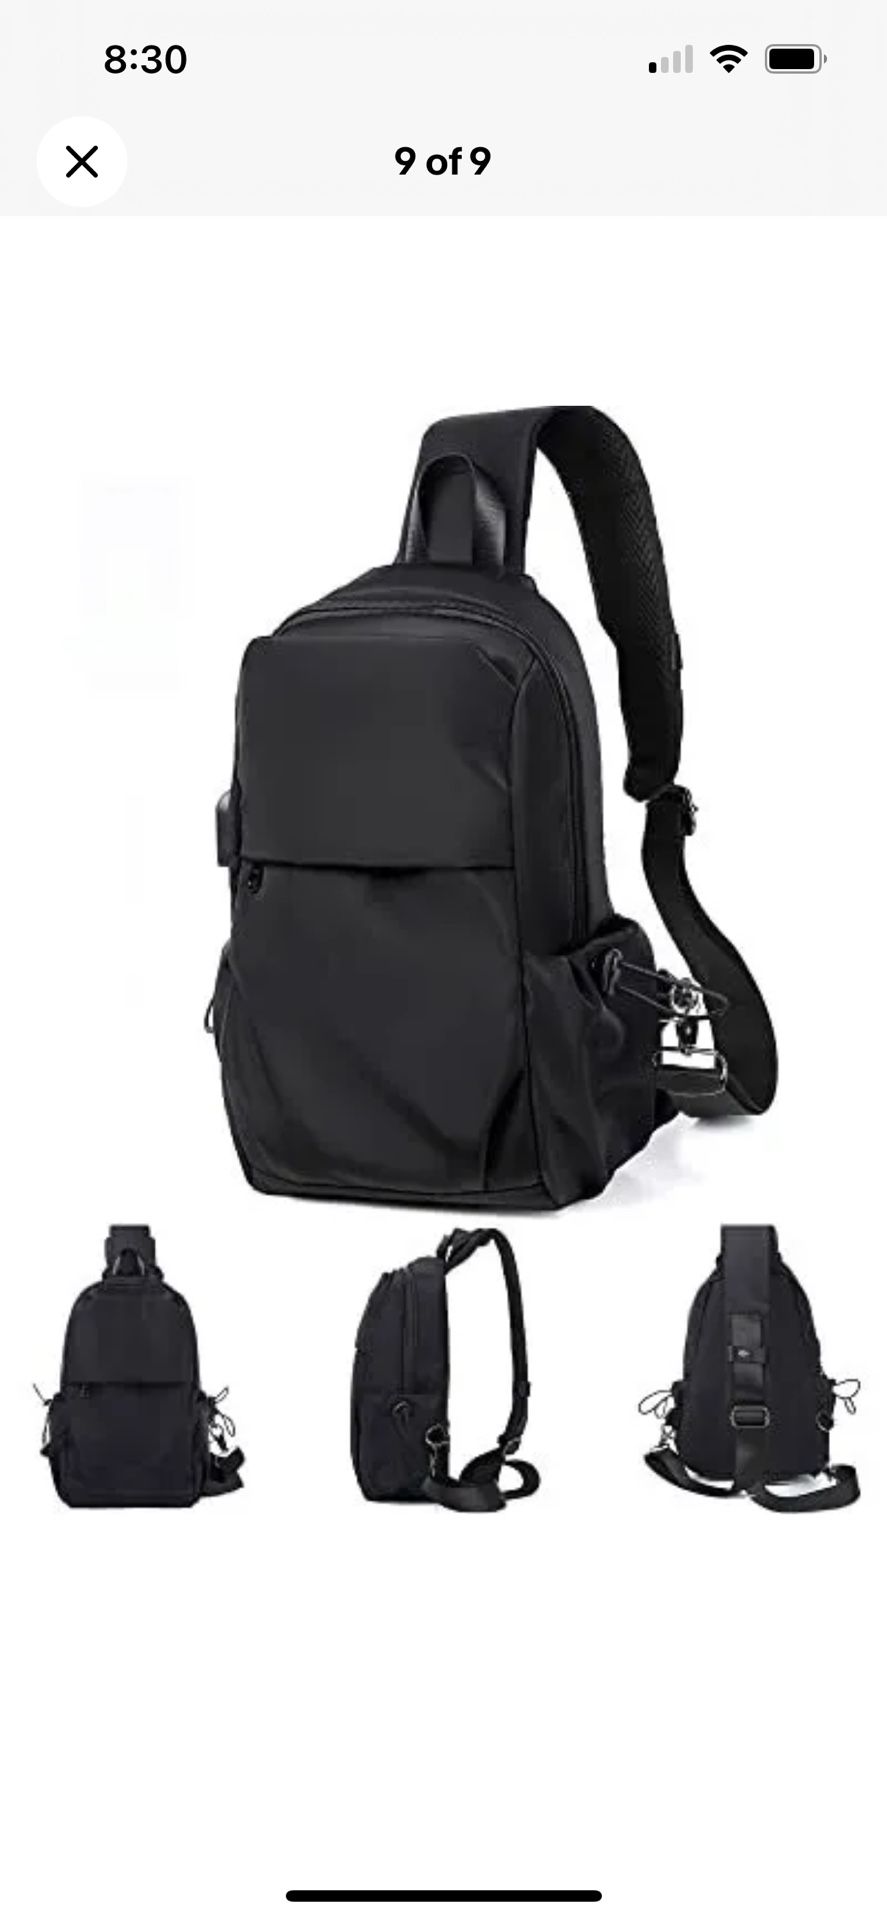 New Small Black Sling Crossbody Backpack Shoulder Bag for Men Women, Lightweight One Strap Sling Bag Backpack for Hiking Walking Biking Travel Cycling